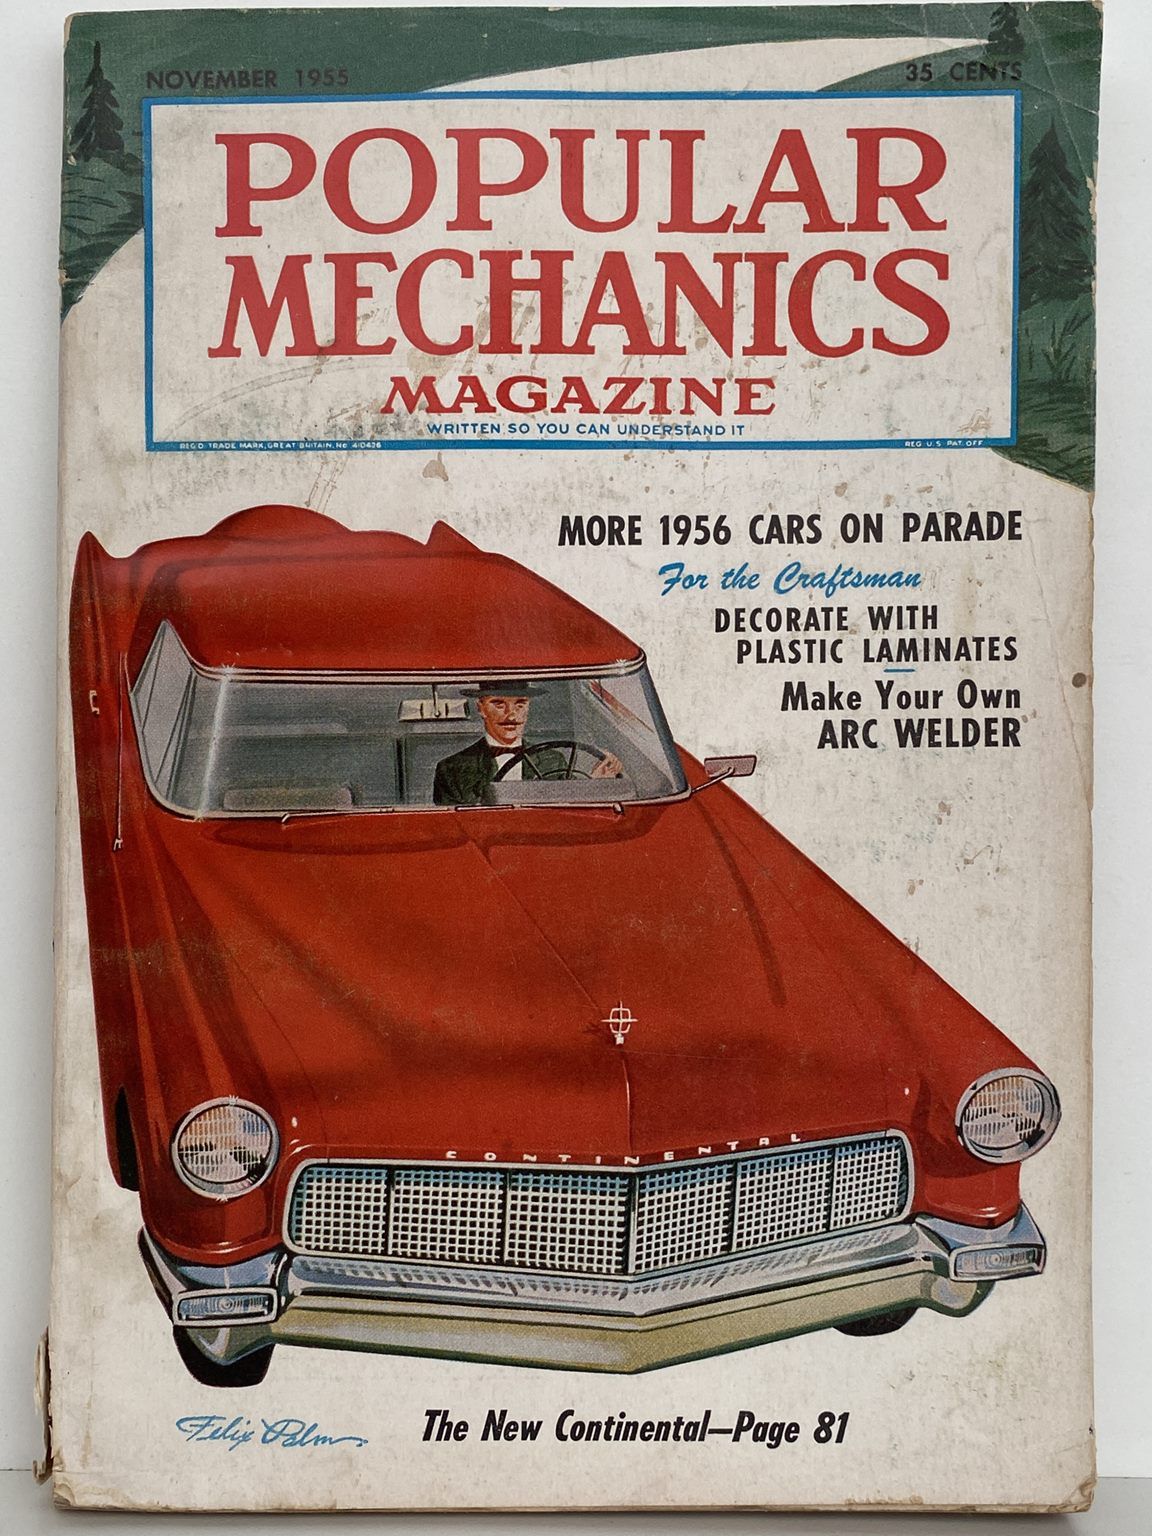 VINTAGE MAGAZINE: Popular Mechanics - Vol. 104, No. 5 - November 1955